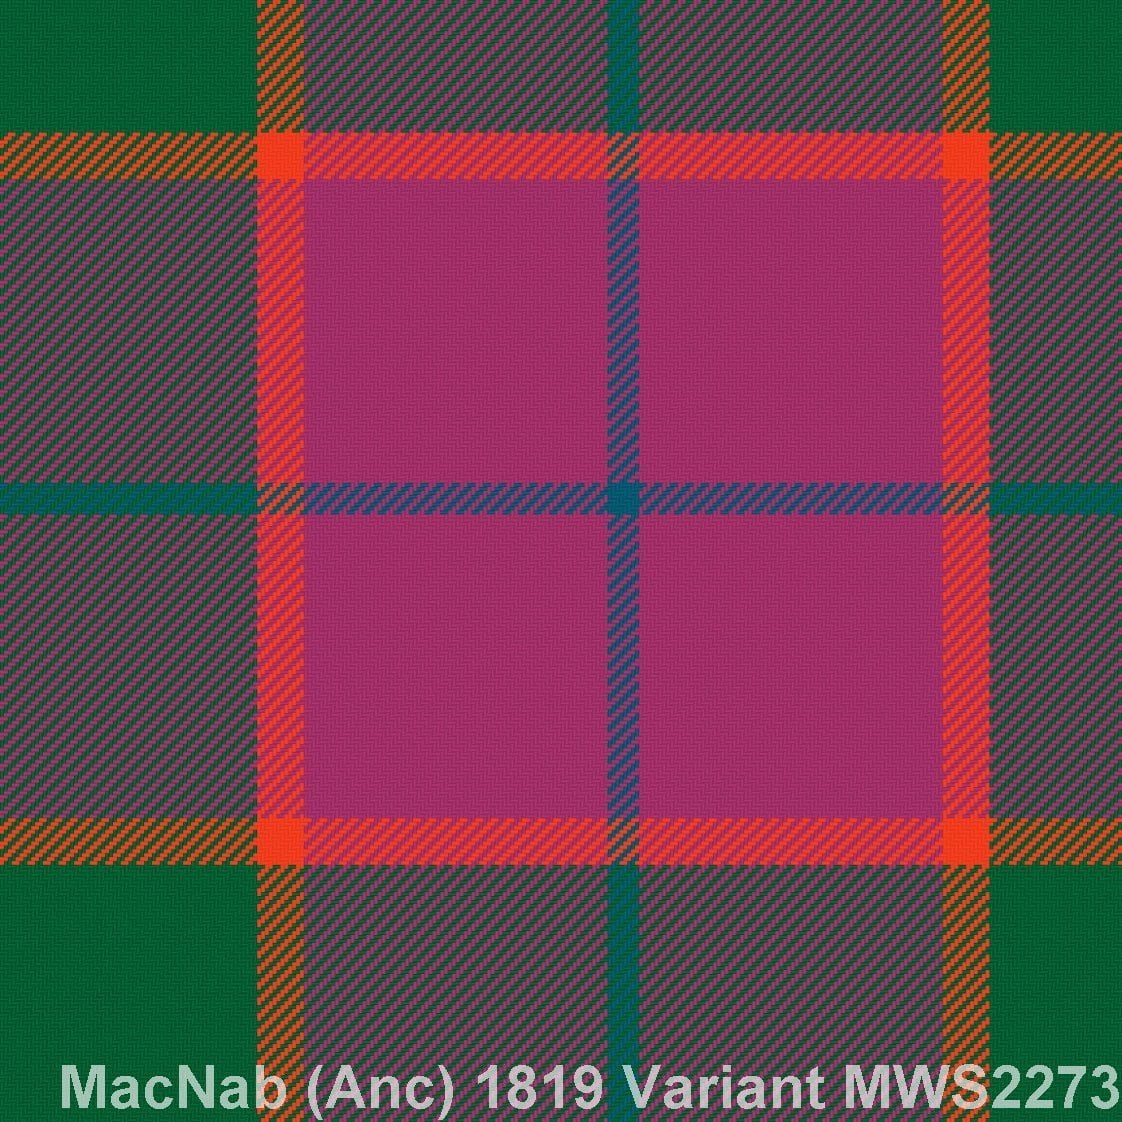 MacNab Ancient 1819 Variant